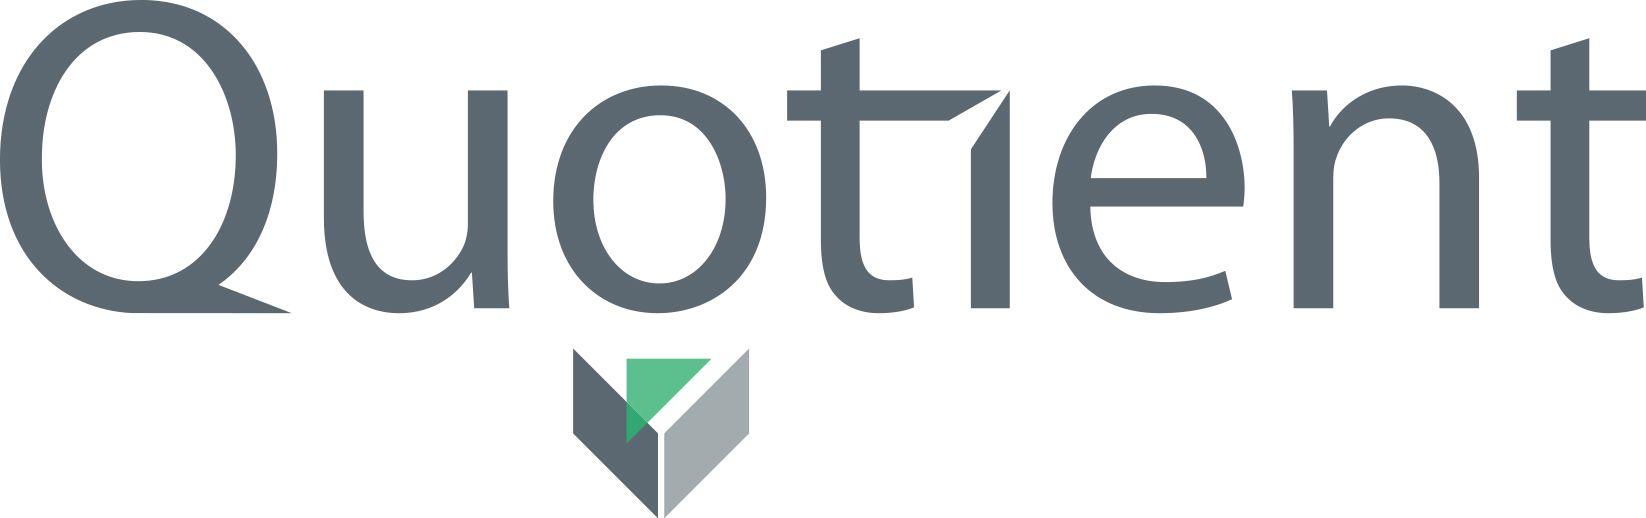 Quotient Logo - Quotient Technology Inc. Analytics Platform From Quotient